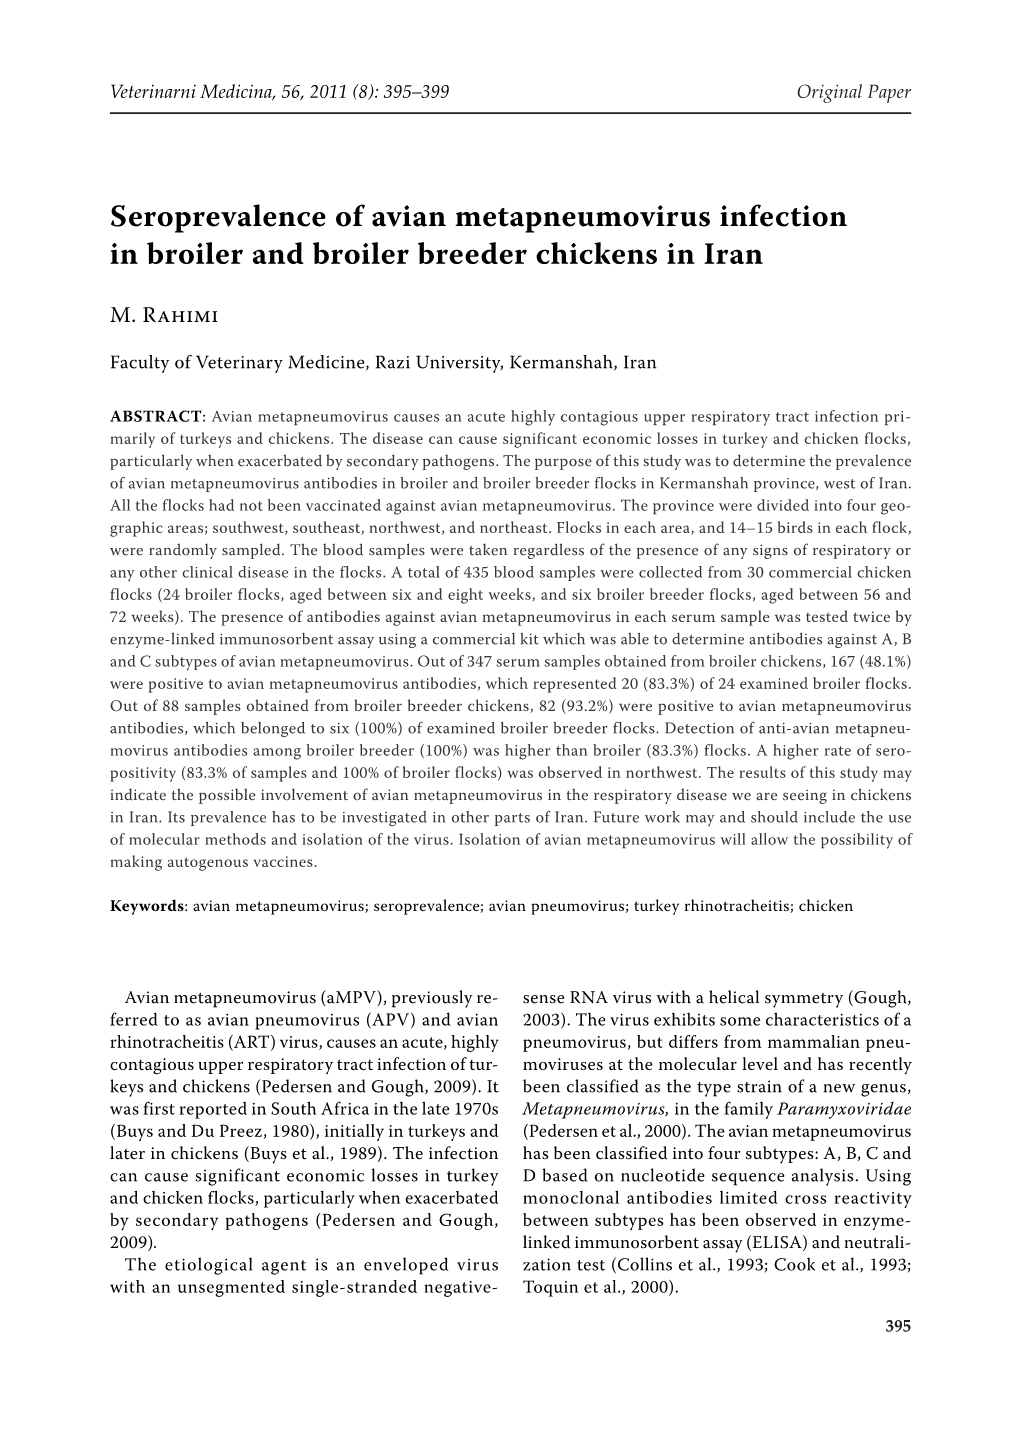 Seroprevalence of Avian Metapneumovirus Infection in Broiler and Broiler Breeder Chickens in Iran